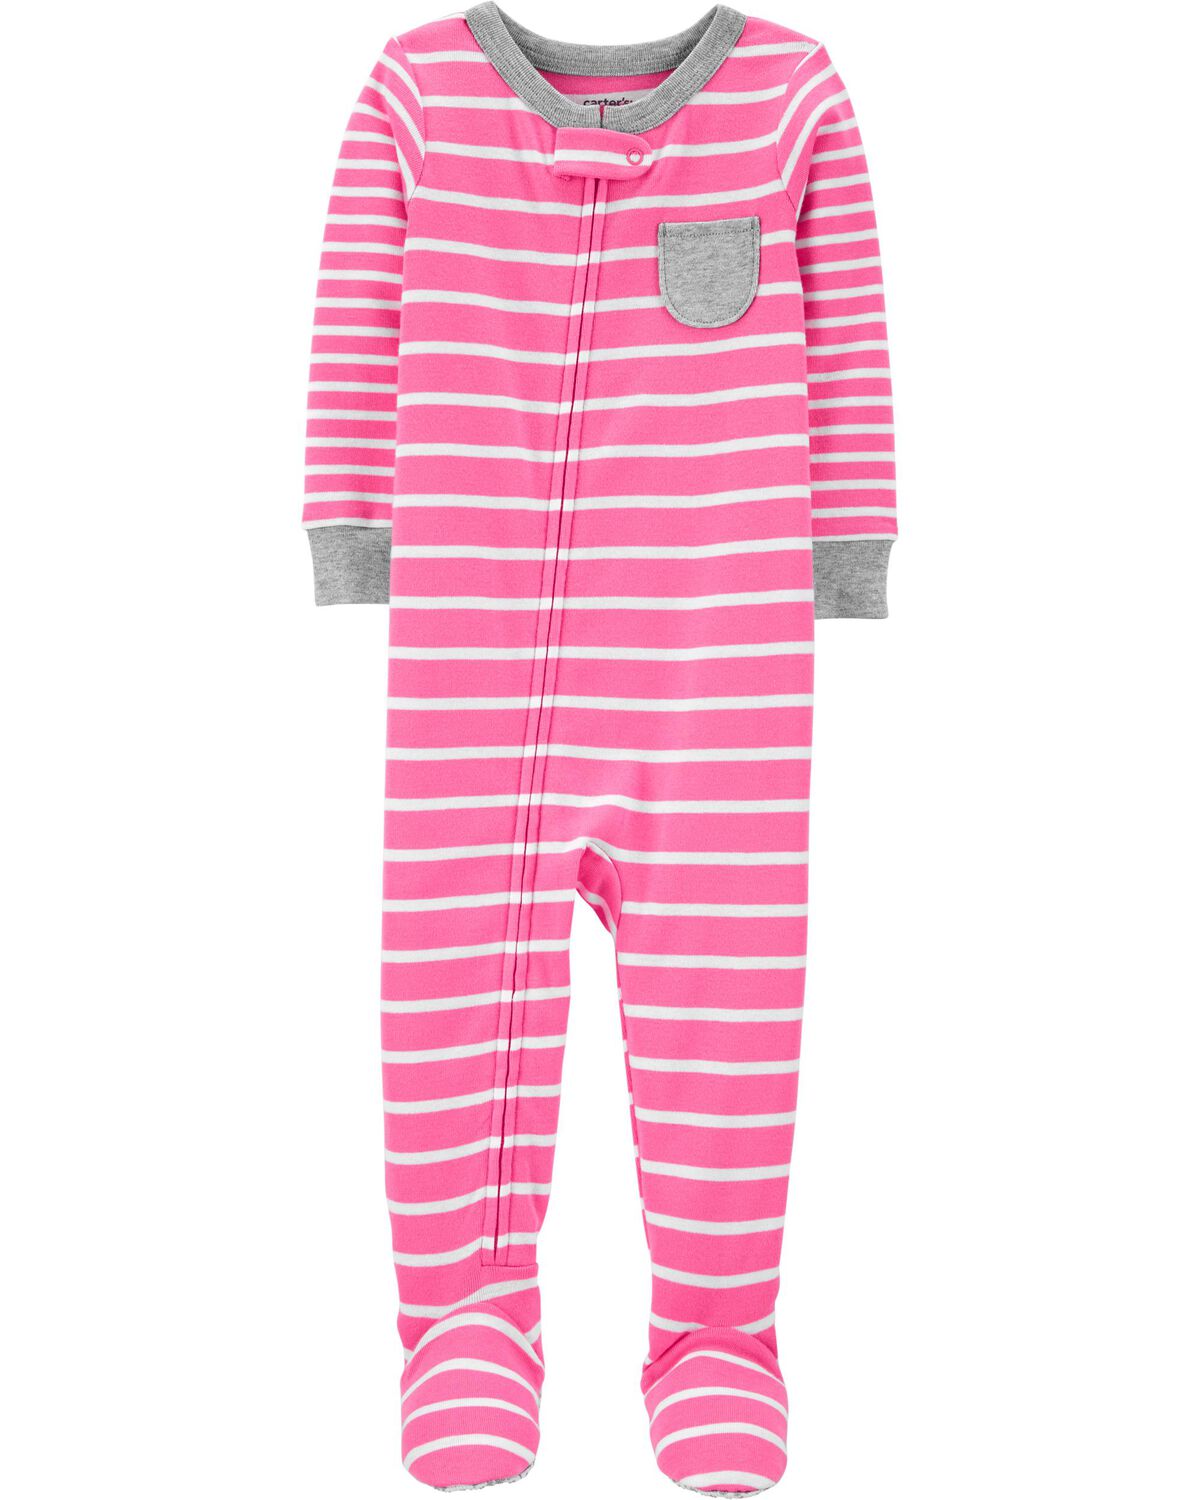 Pink Baby 1-Piece Striped 100% Snug Fit Cotton Footie Pajamas | carters.com